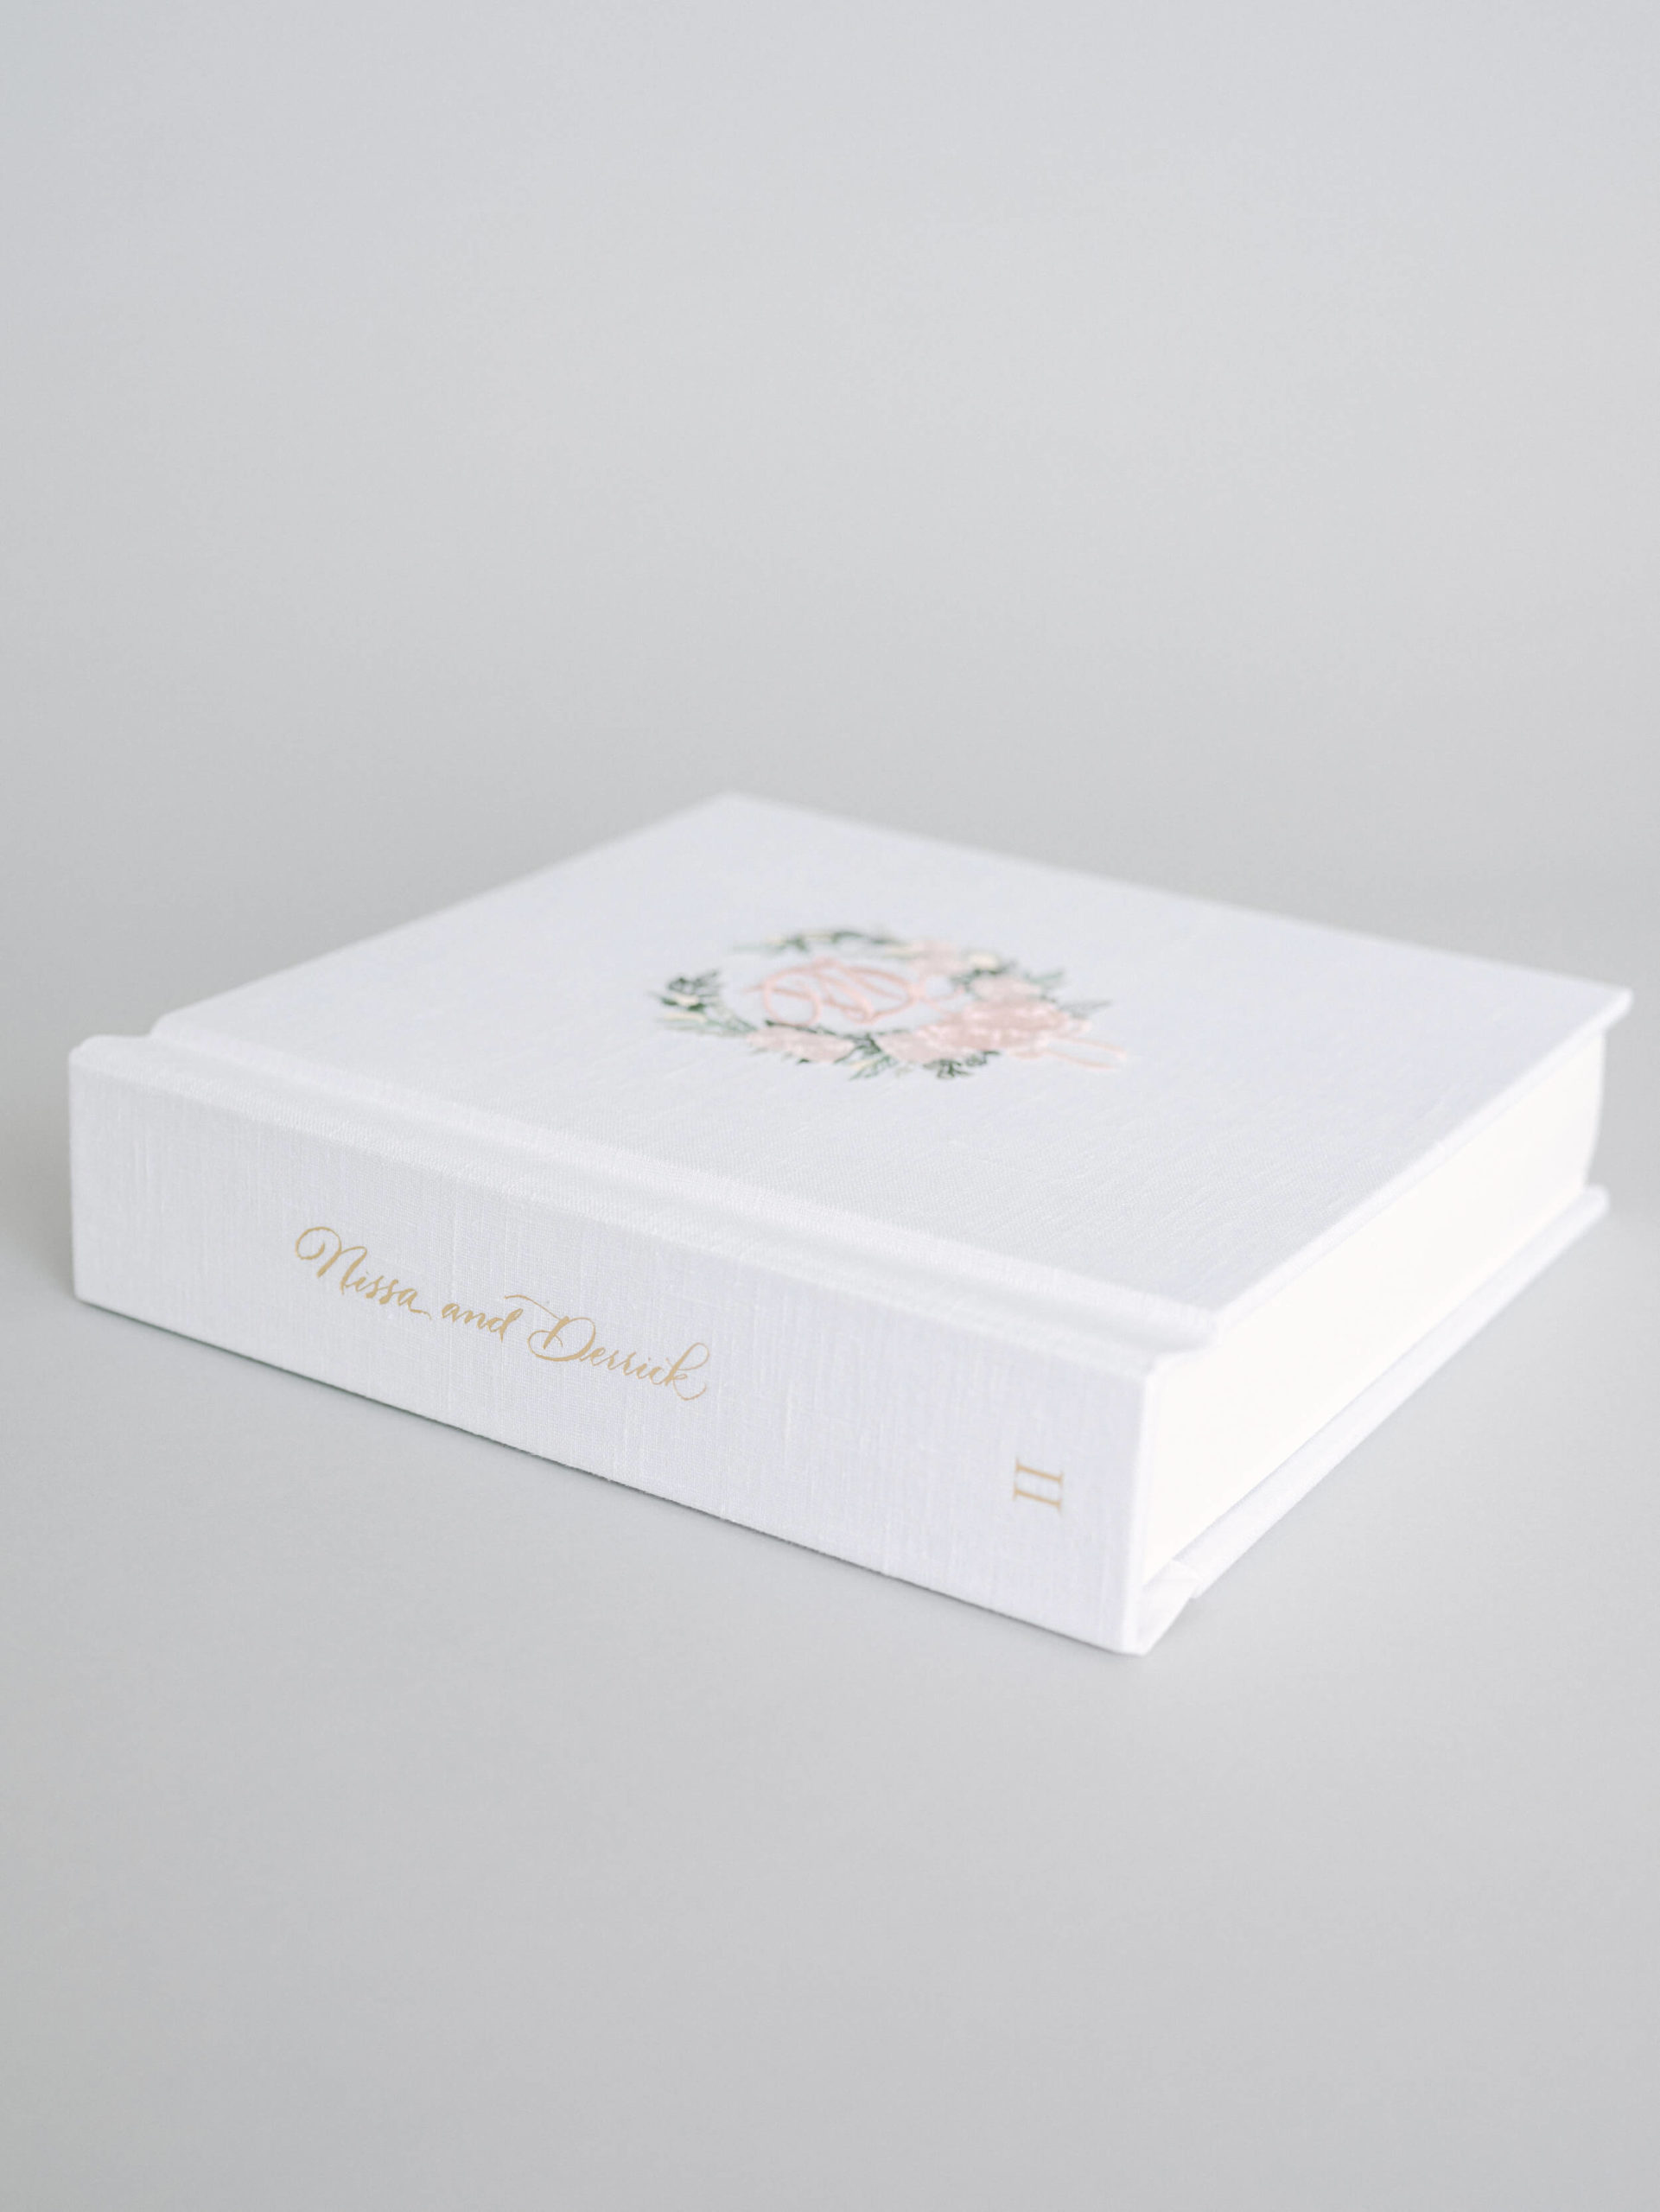 custom wedding album with gold foil imprinting